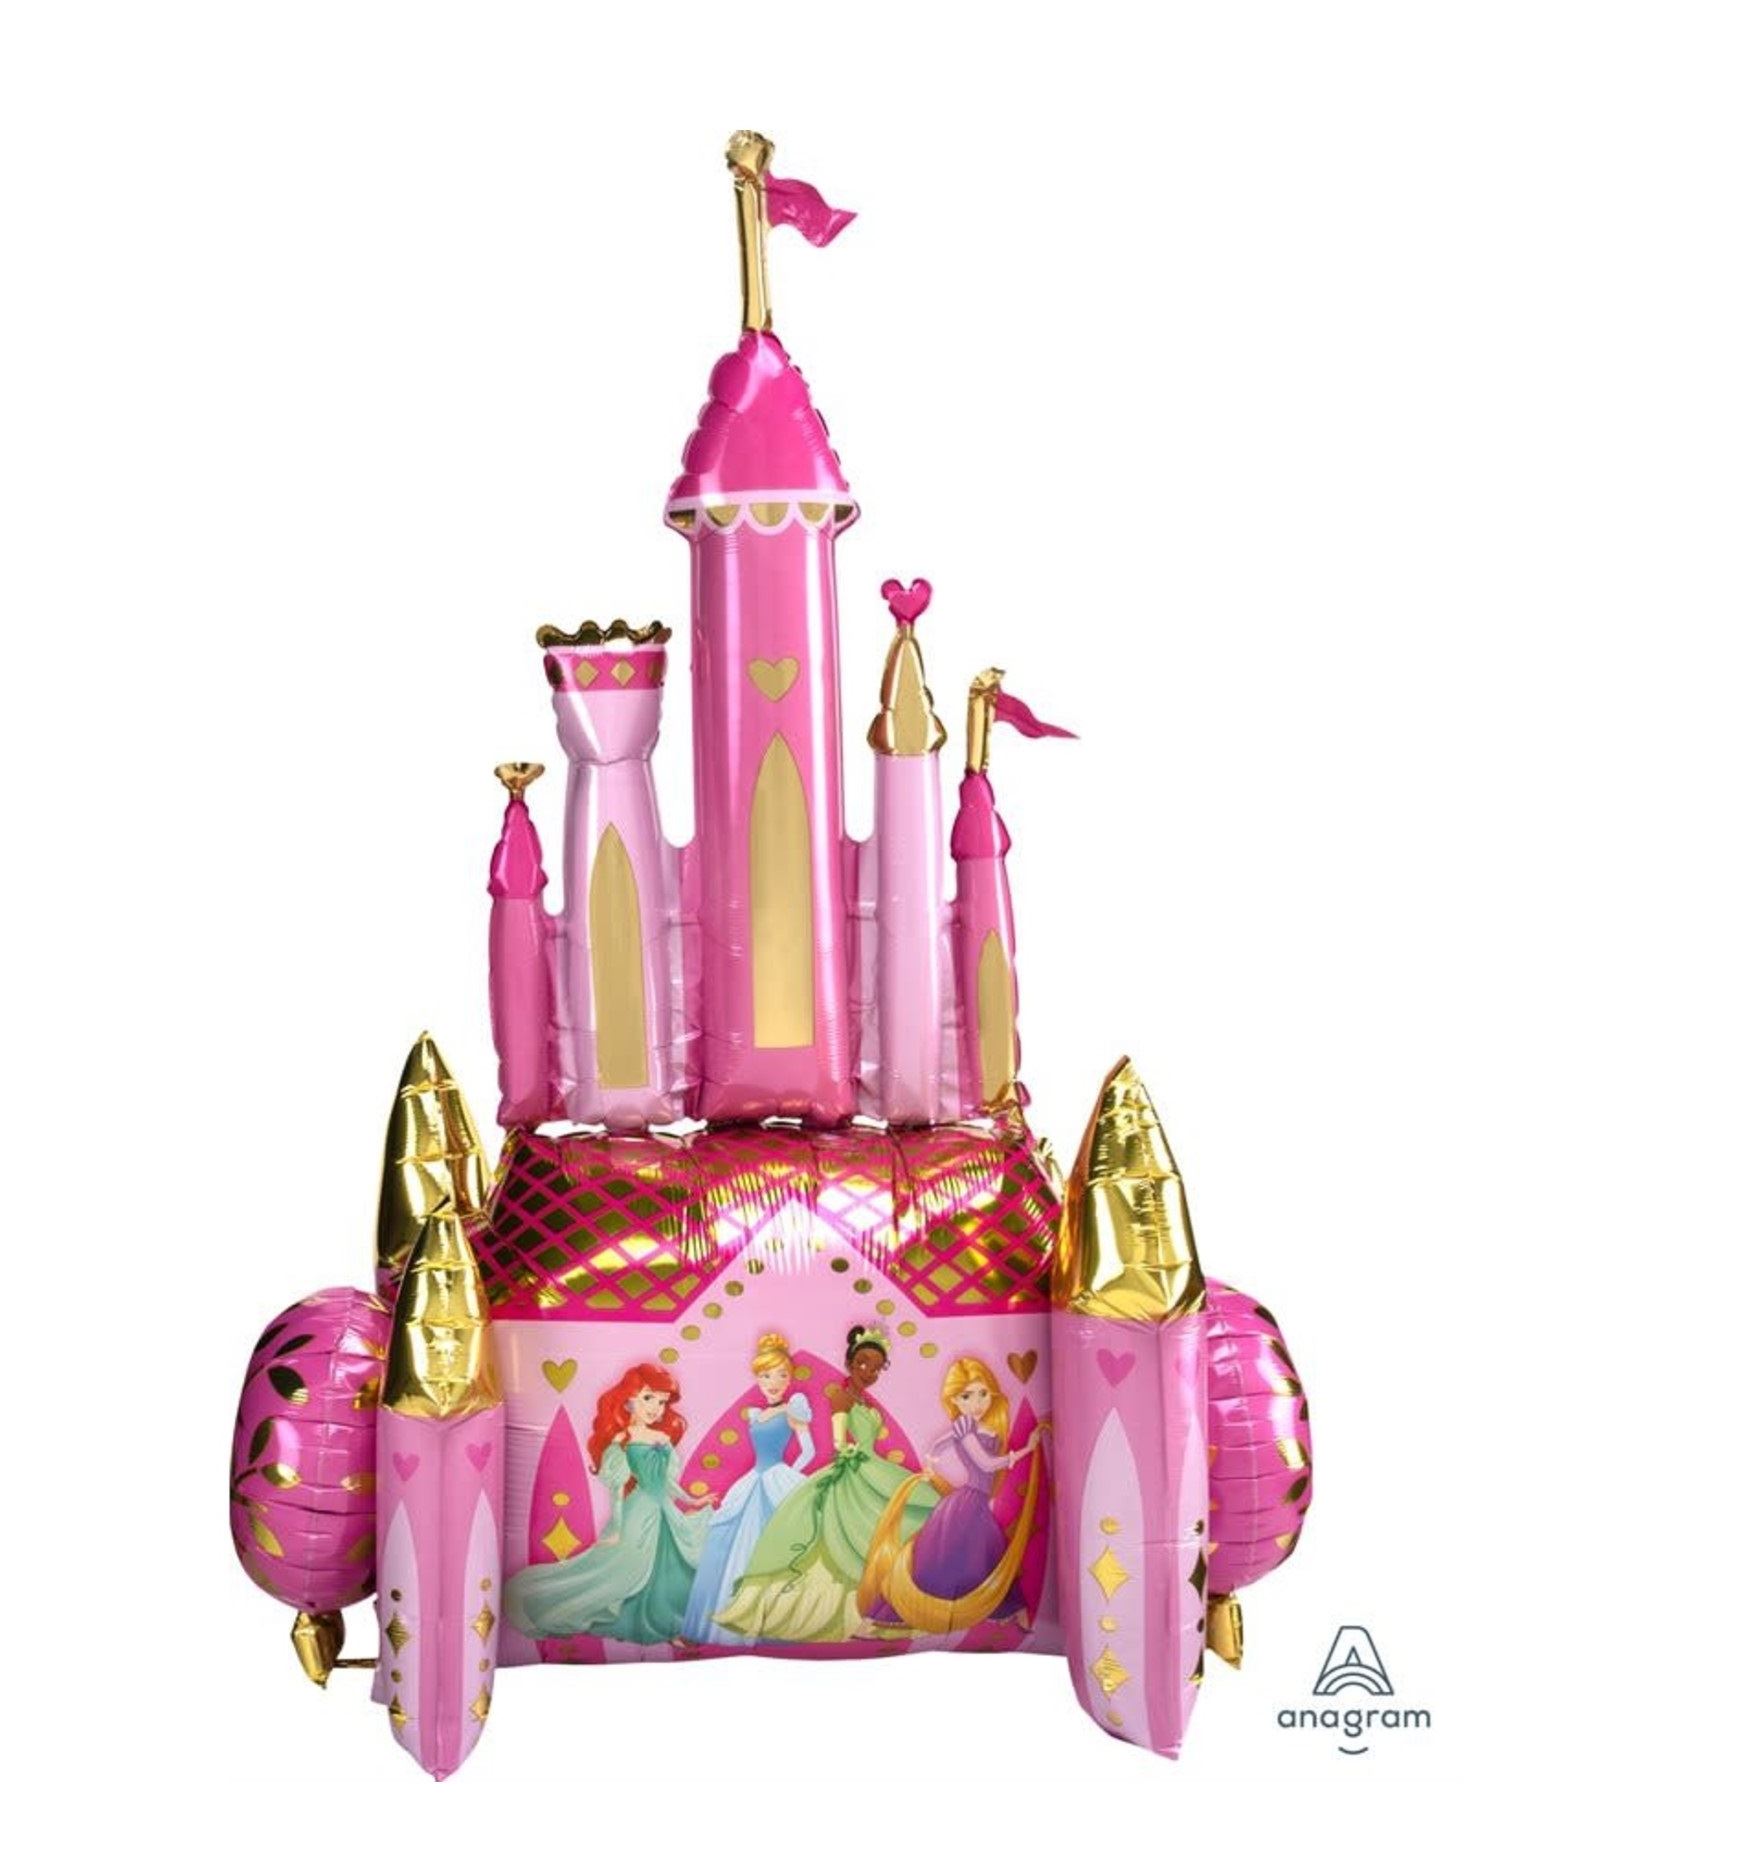 Globo Castillo de Princesas Disney Gigante (139cm)✔️ por sólo 25